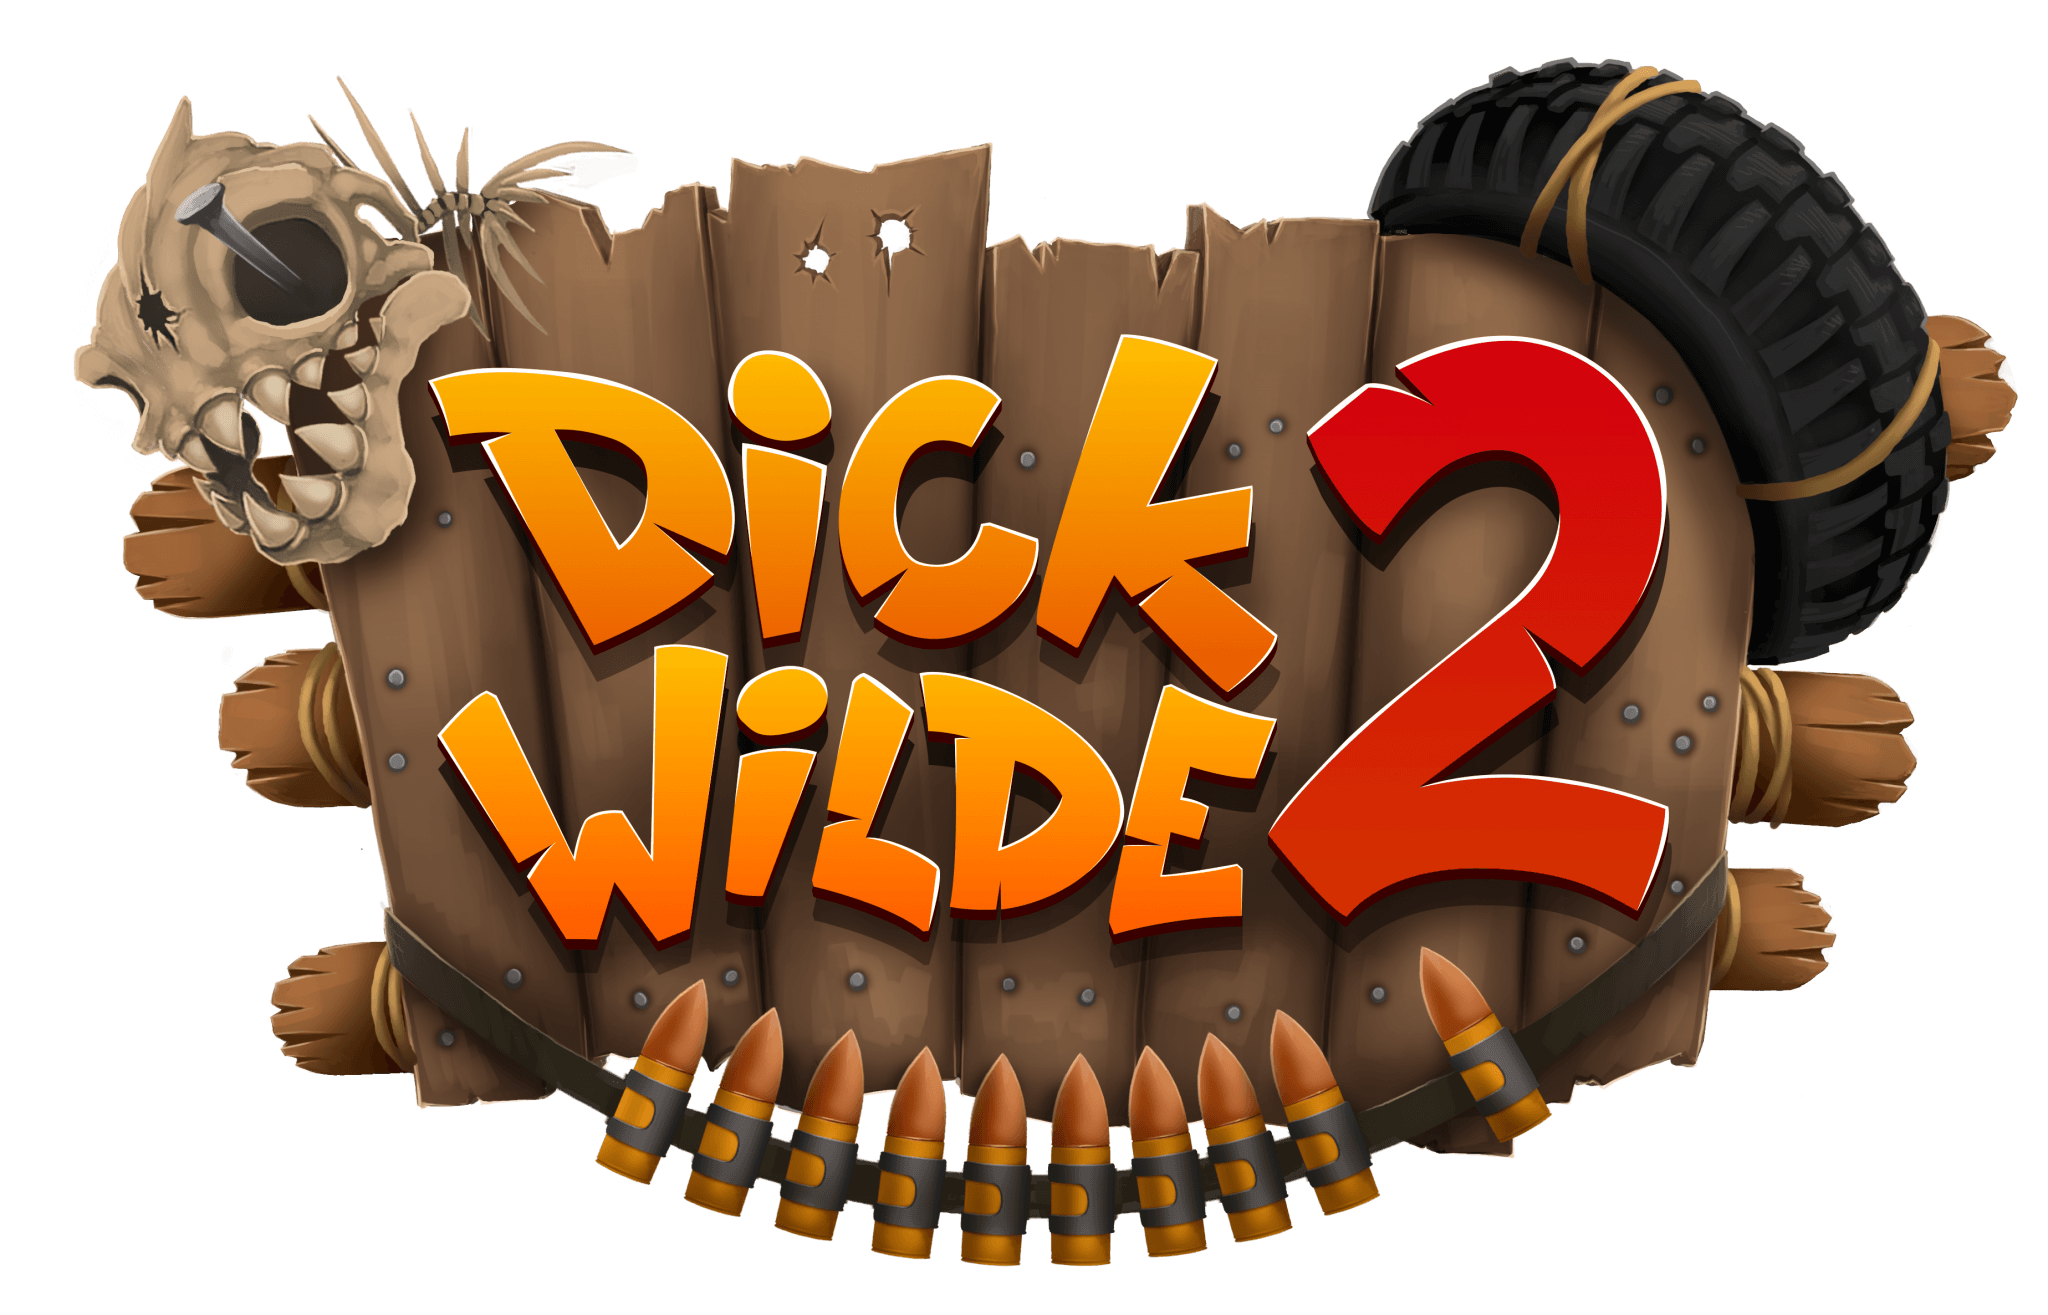 Dick Wilde 2